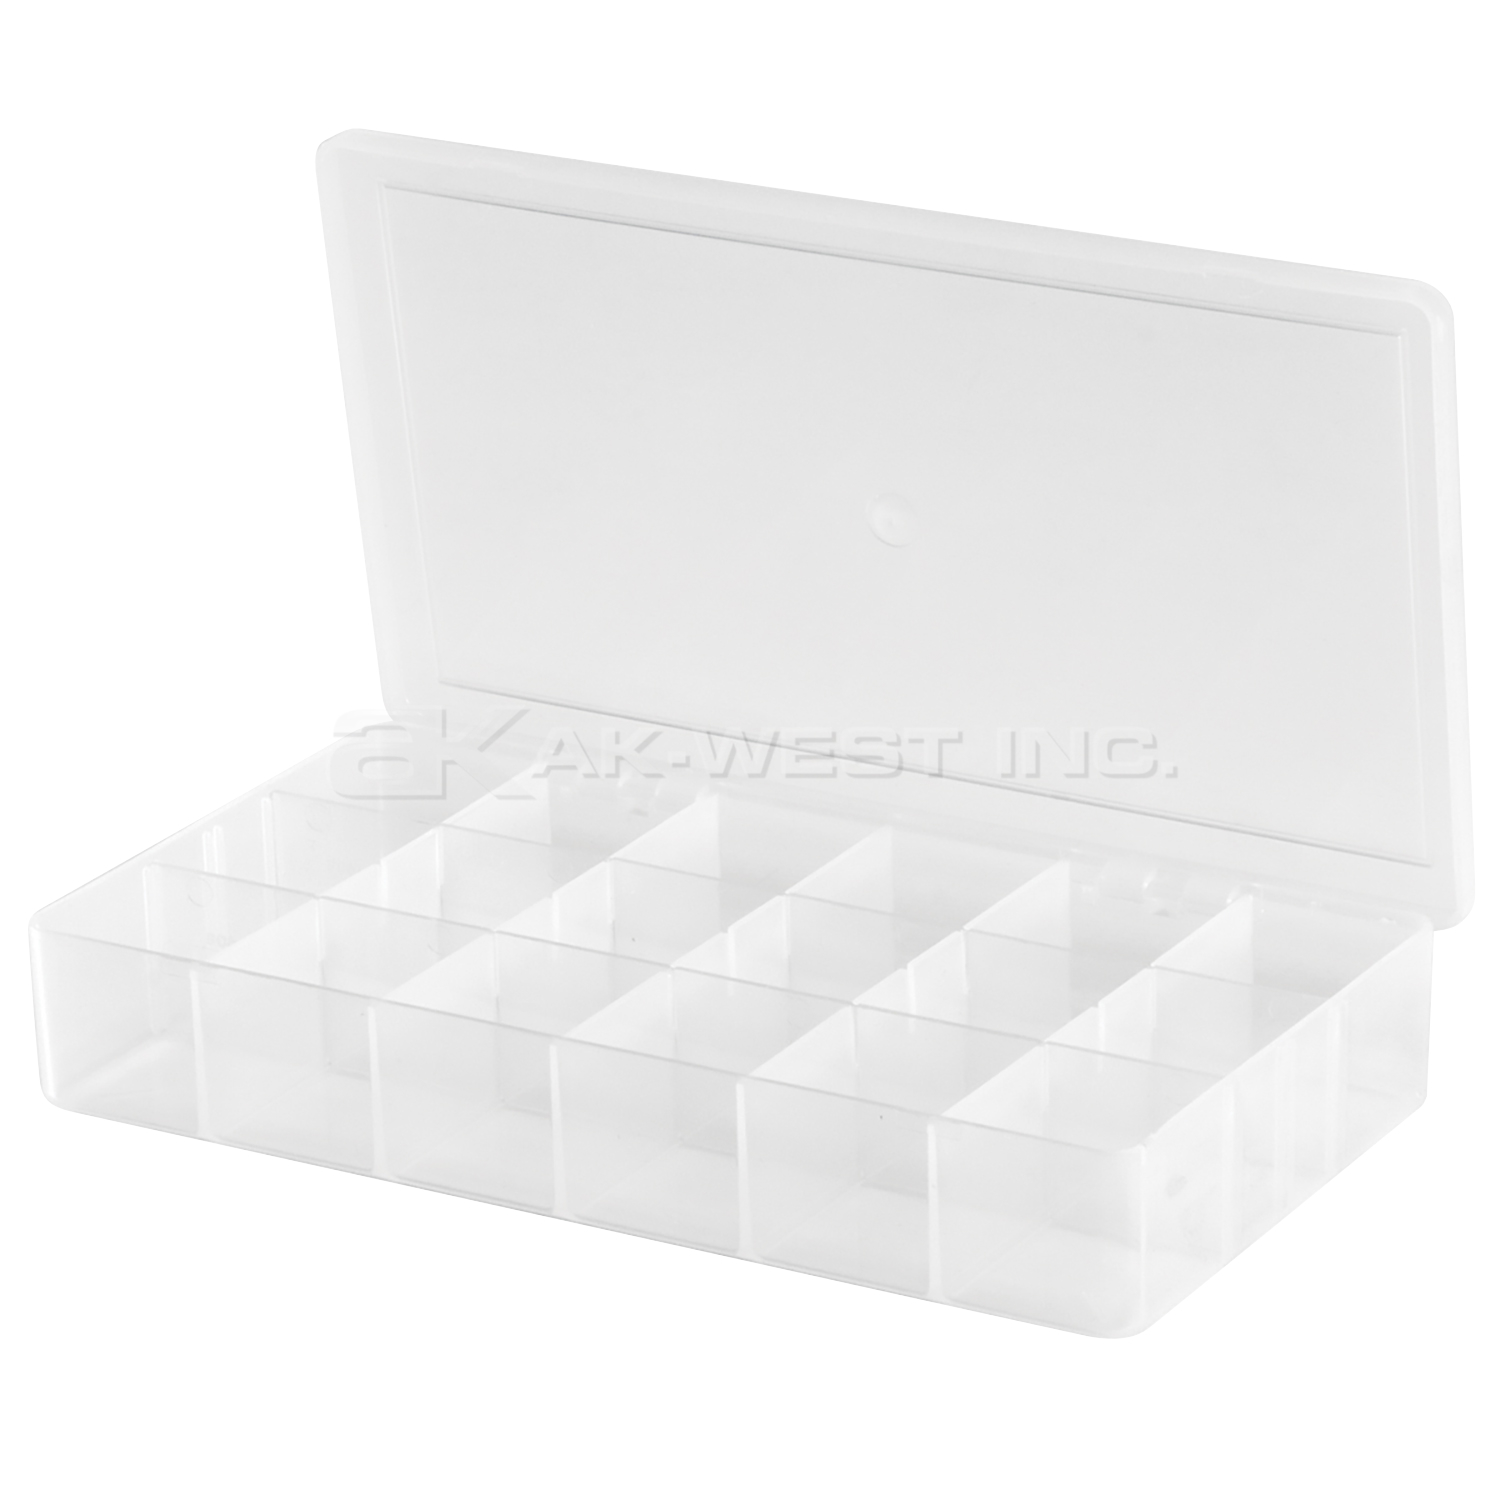 Clear, 8-5/16" x 4-5/8" x 1-1/2", 18 Compartments, Utility Box (12 Per Carton)